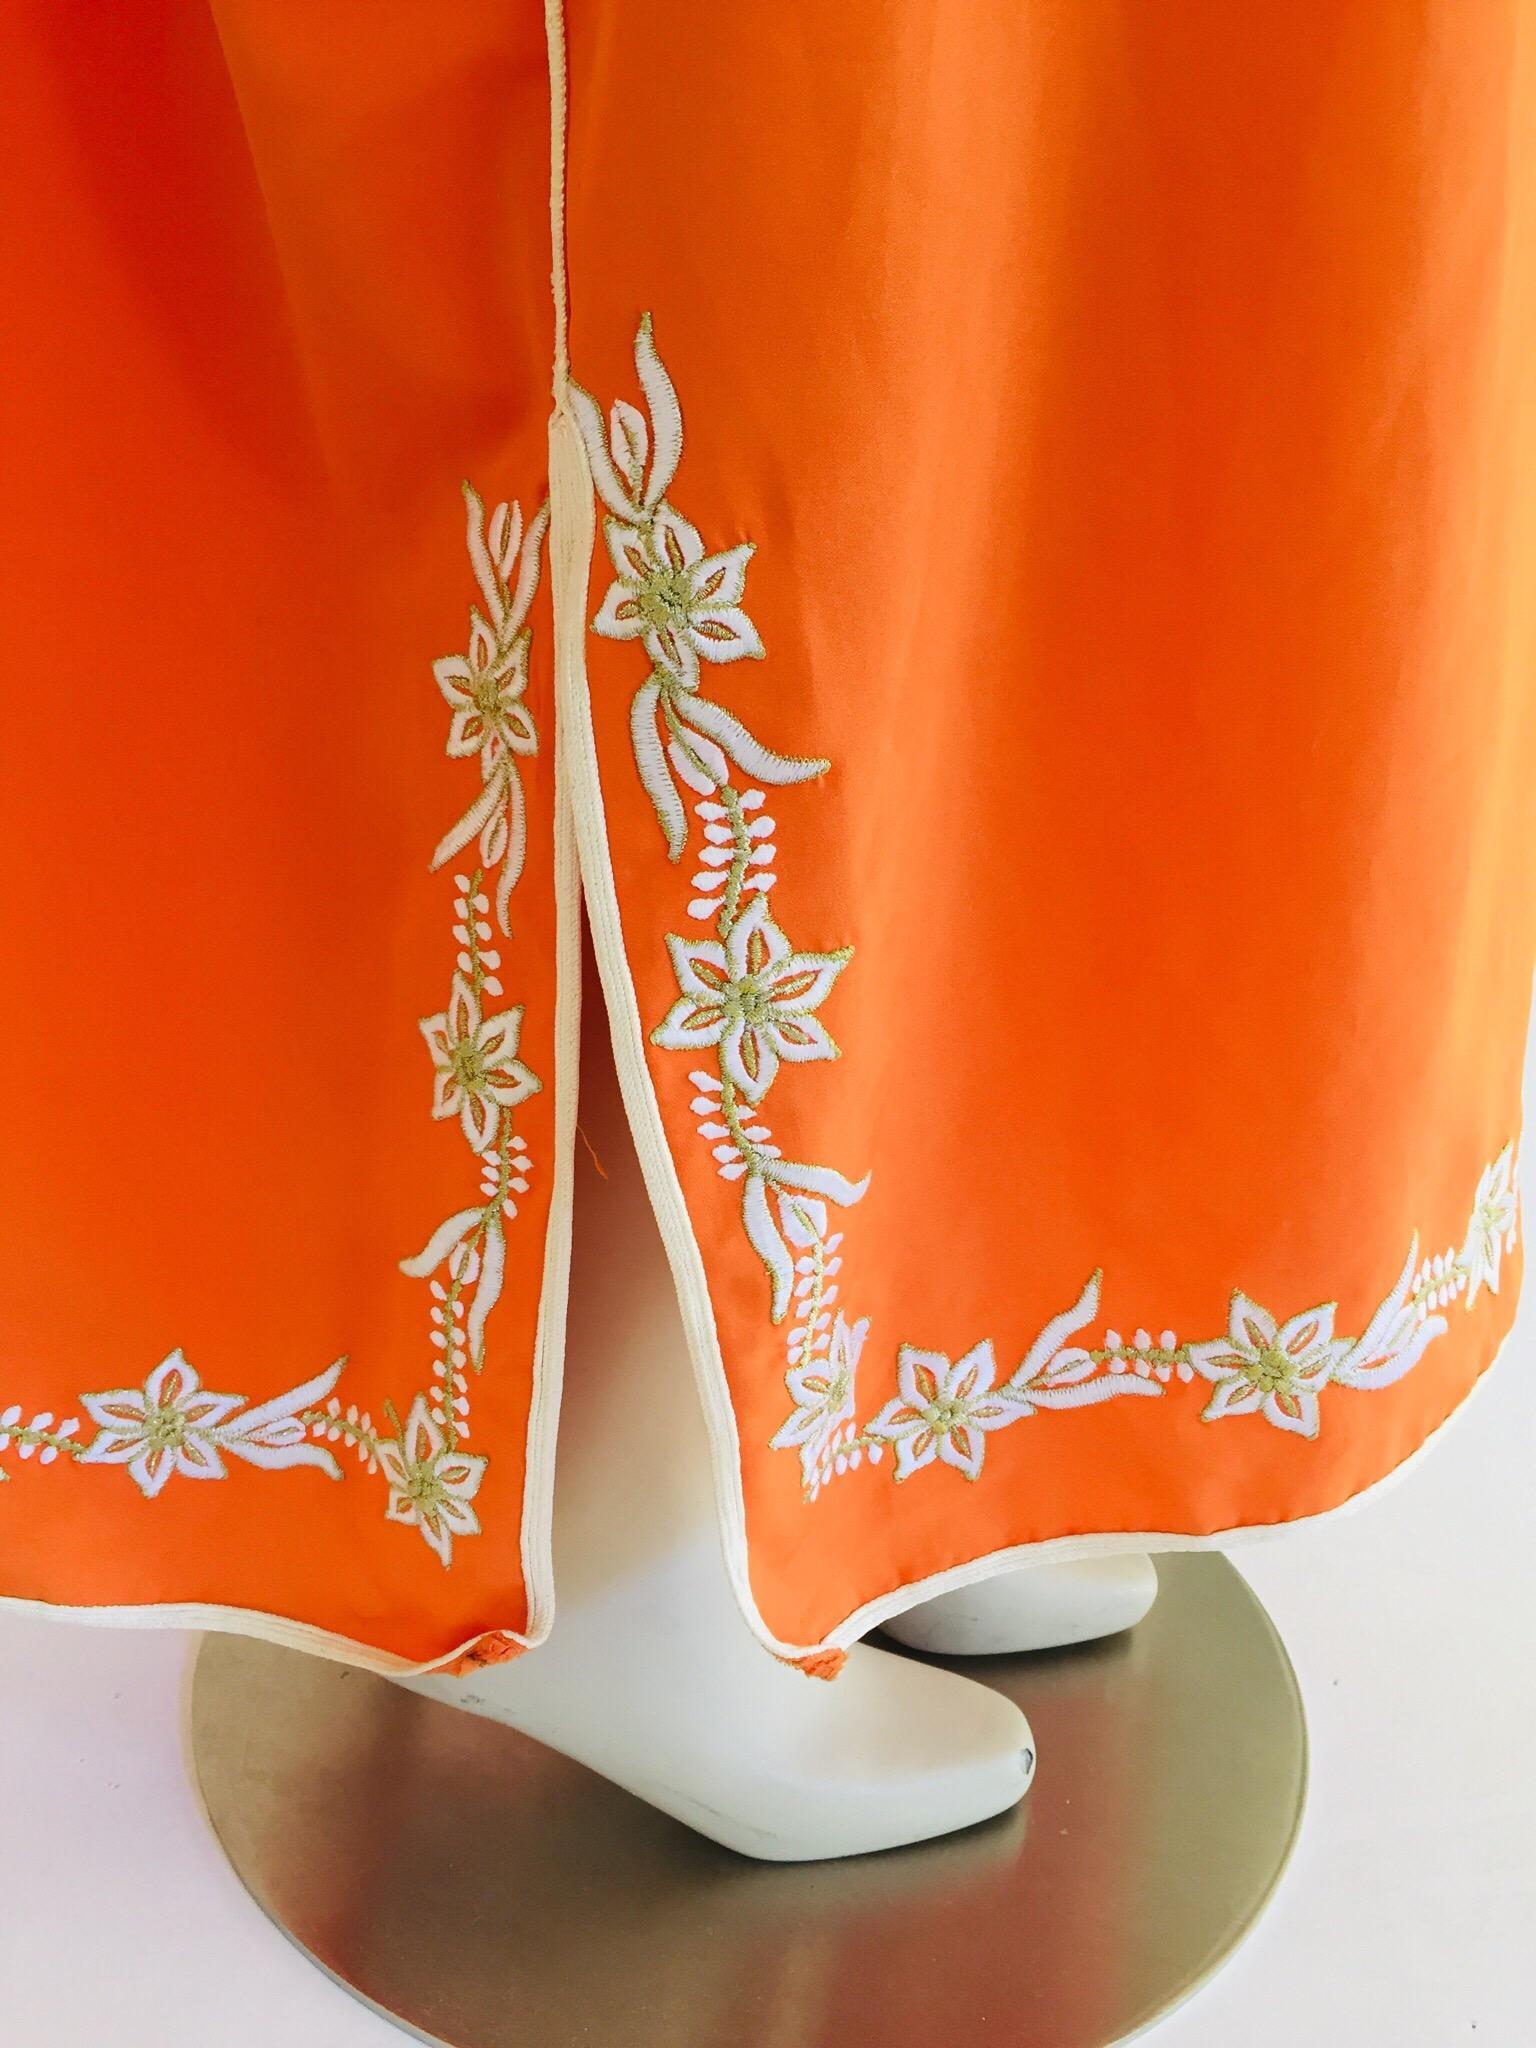 Moroccan Orange Kaftan Maxi Dress Caftan For Sale 2